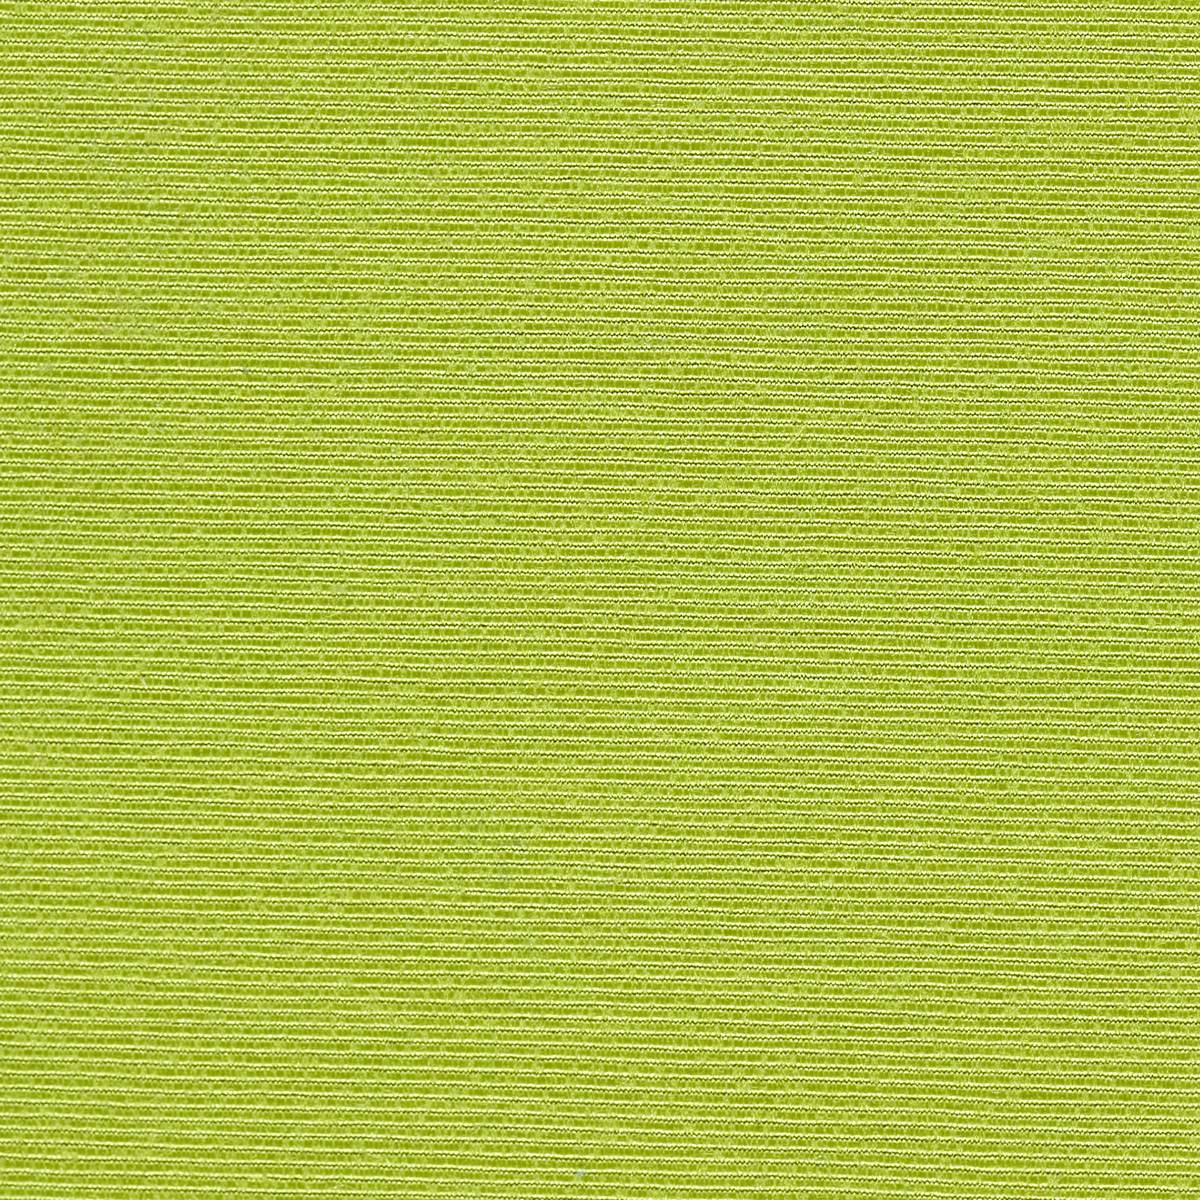 Optix Zing Green Fabric by Harlequin